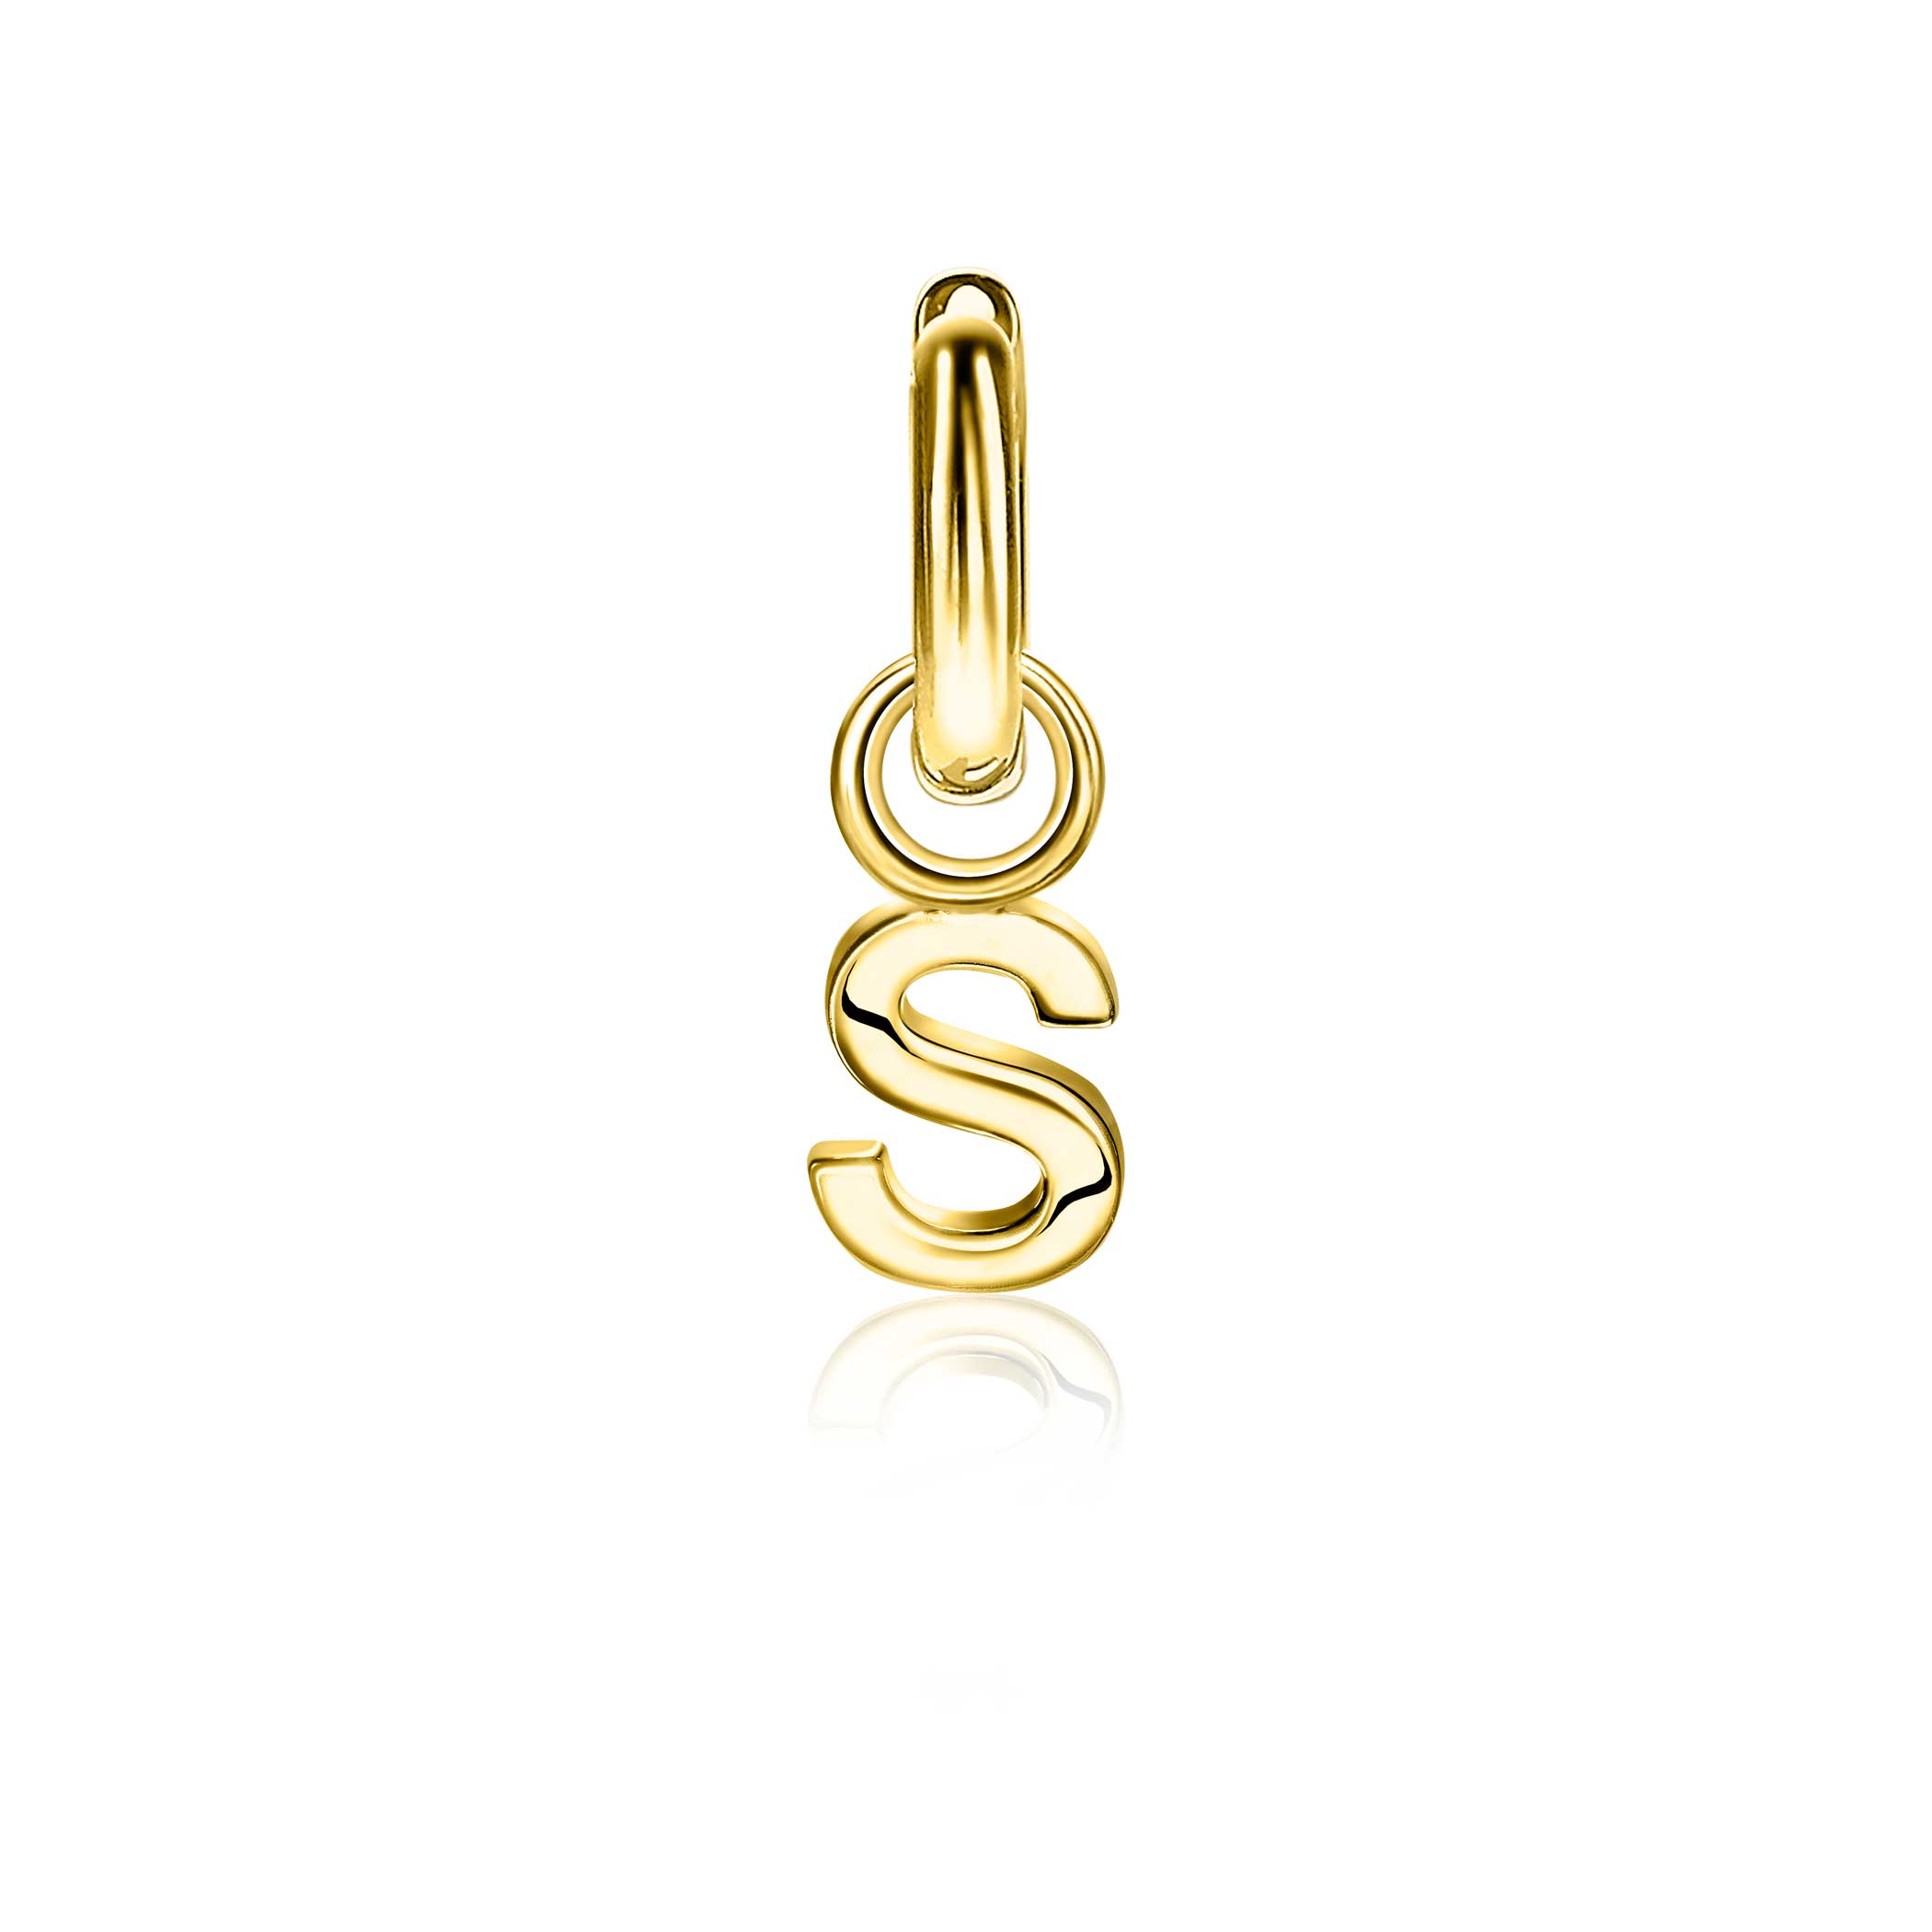 ZINZI Gold Plated Letter Earrings Pendant S price per piece ZICH2145S (excl. hoop earrings)